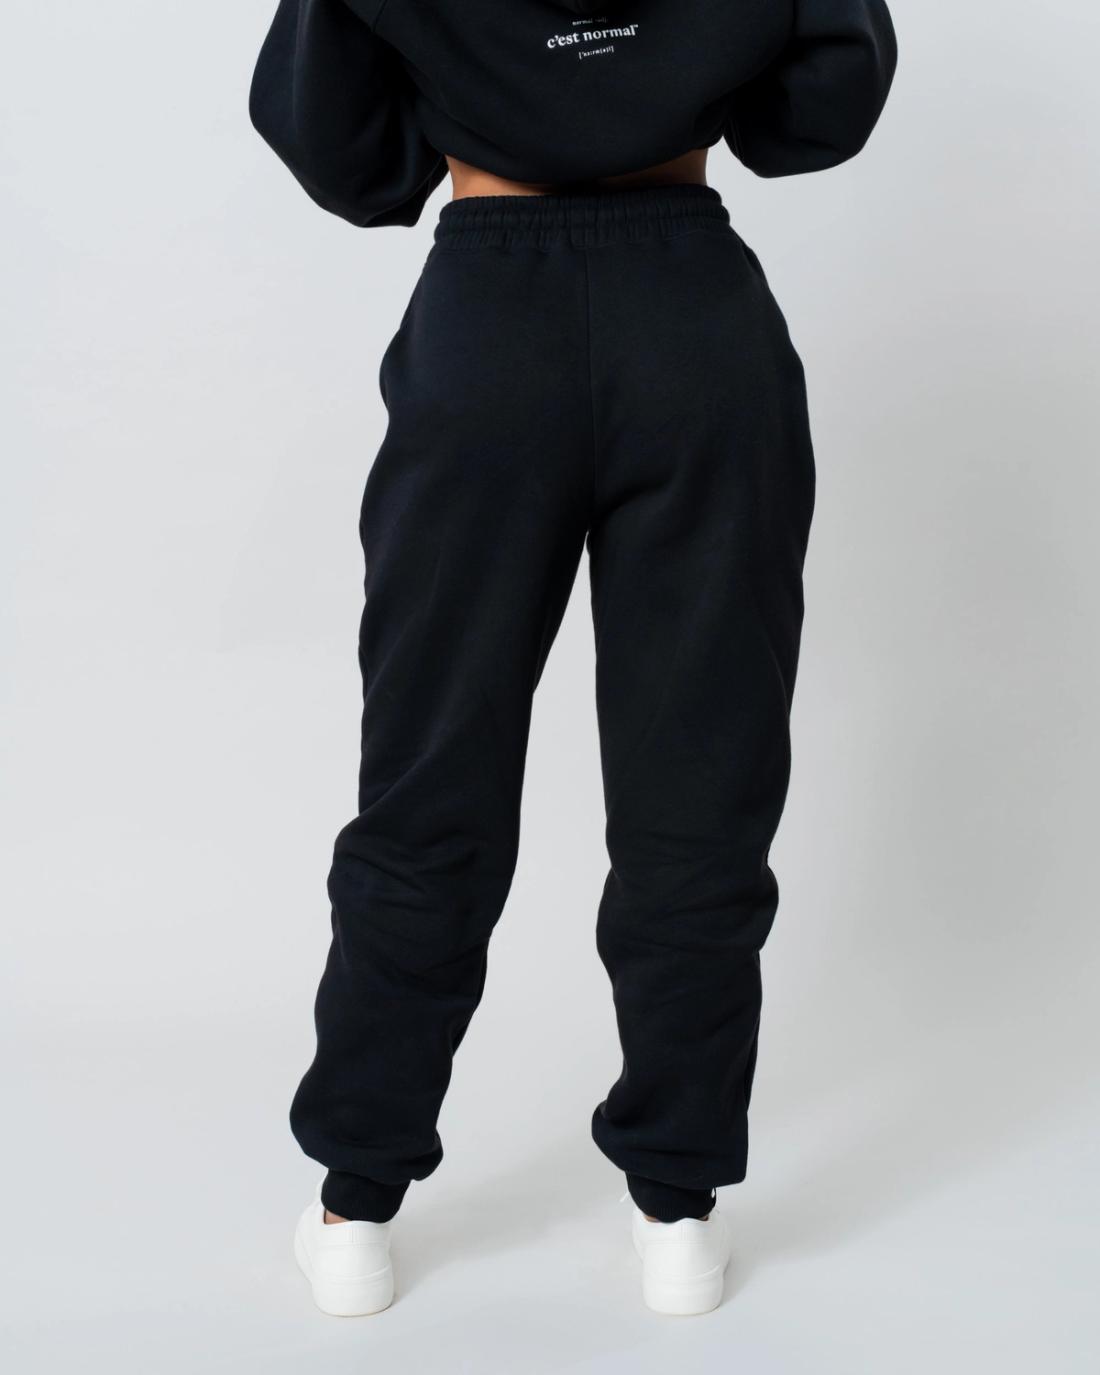 C Est Normal Sweatpants Men's Small Black Jogger Track Pants Cuffed  Streetwear 